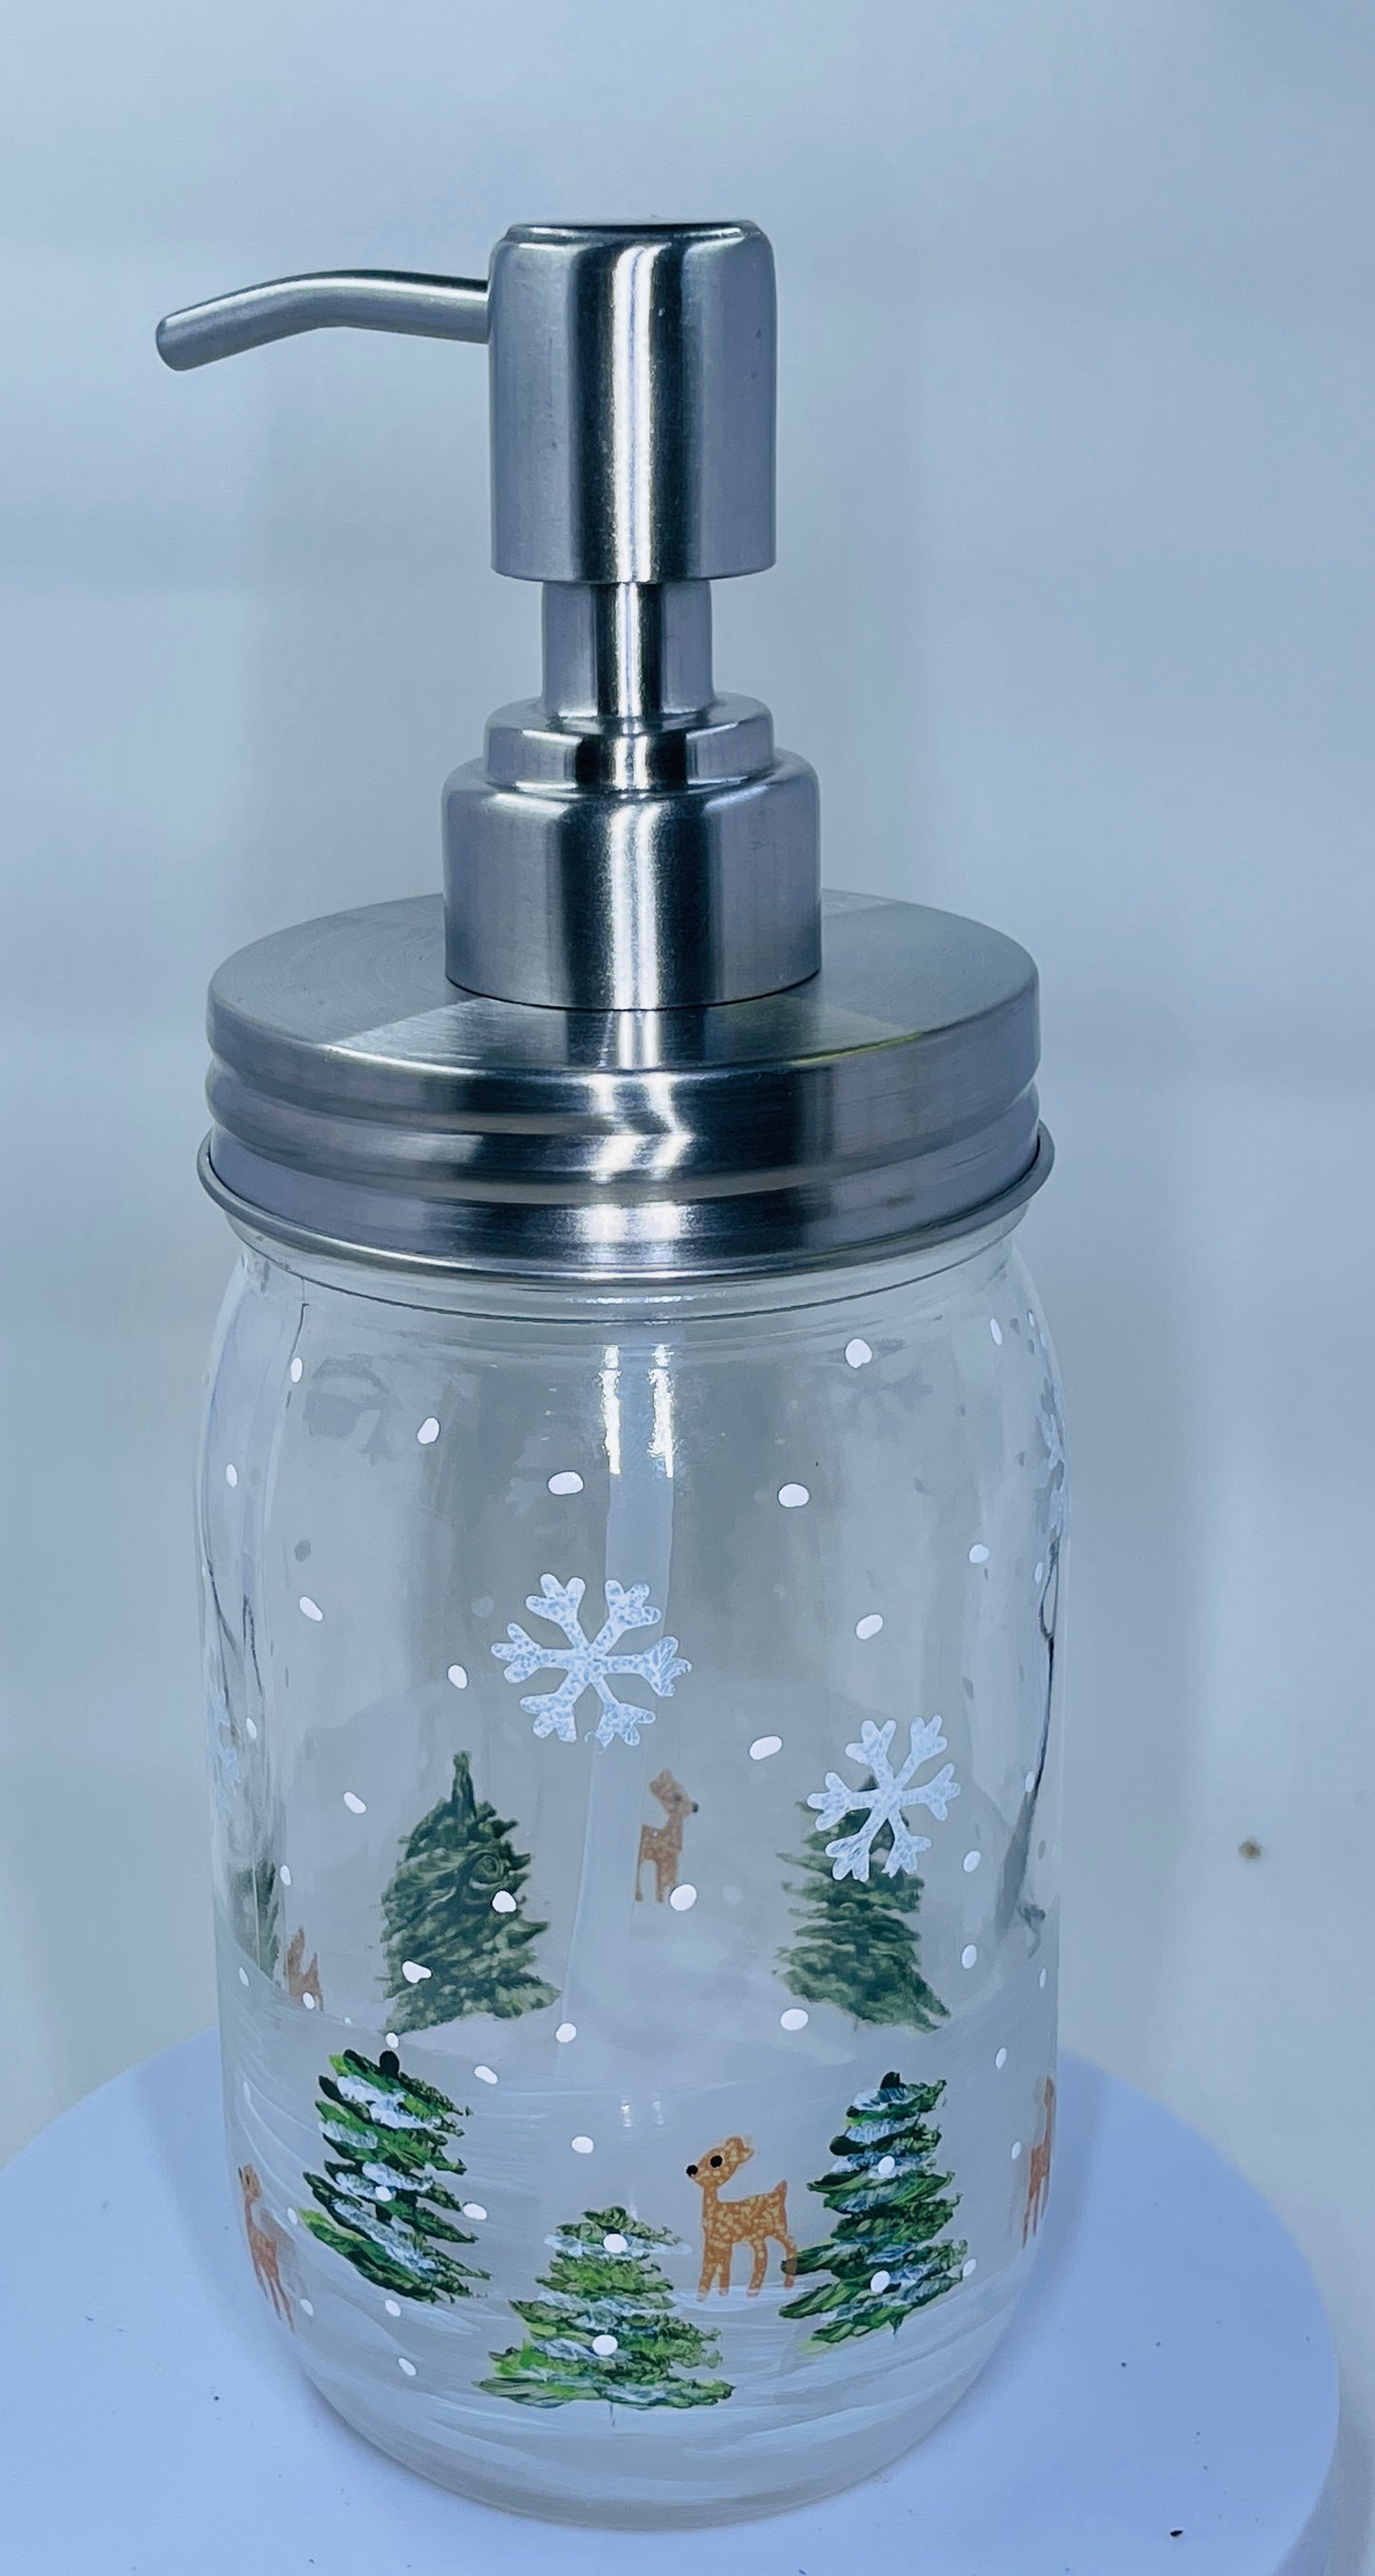 Reindeer with trees in Snow Mason Jar Soap Dispenser 16 oz glass dispenser